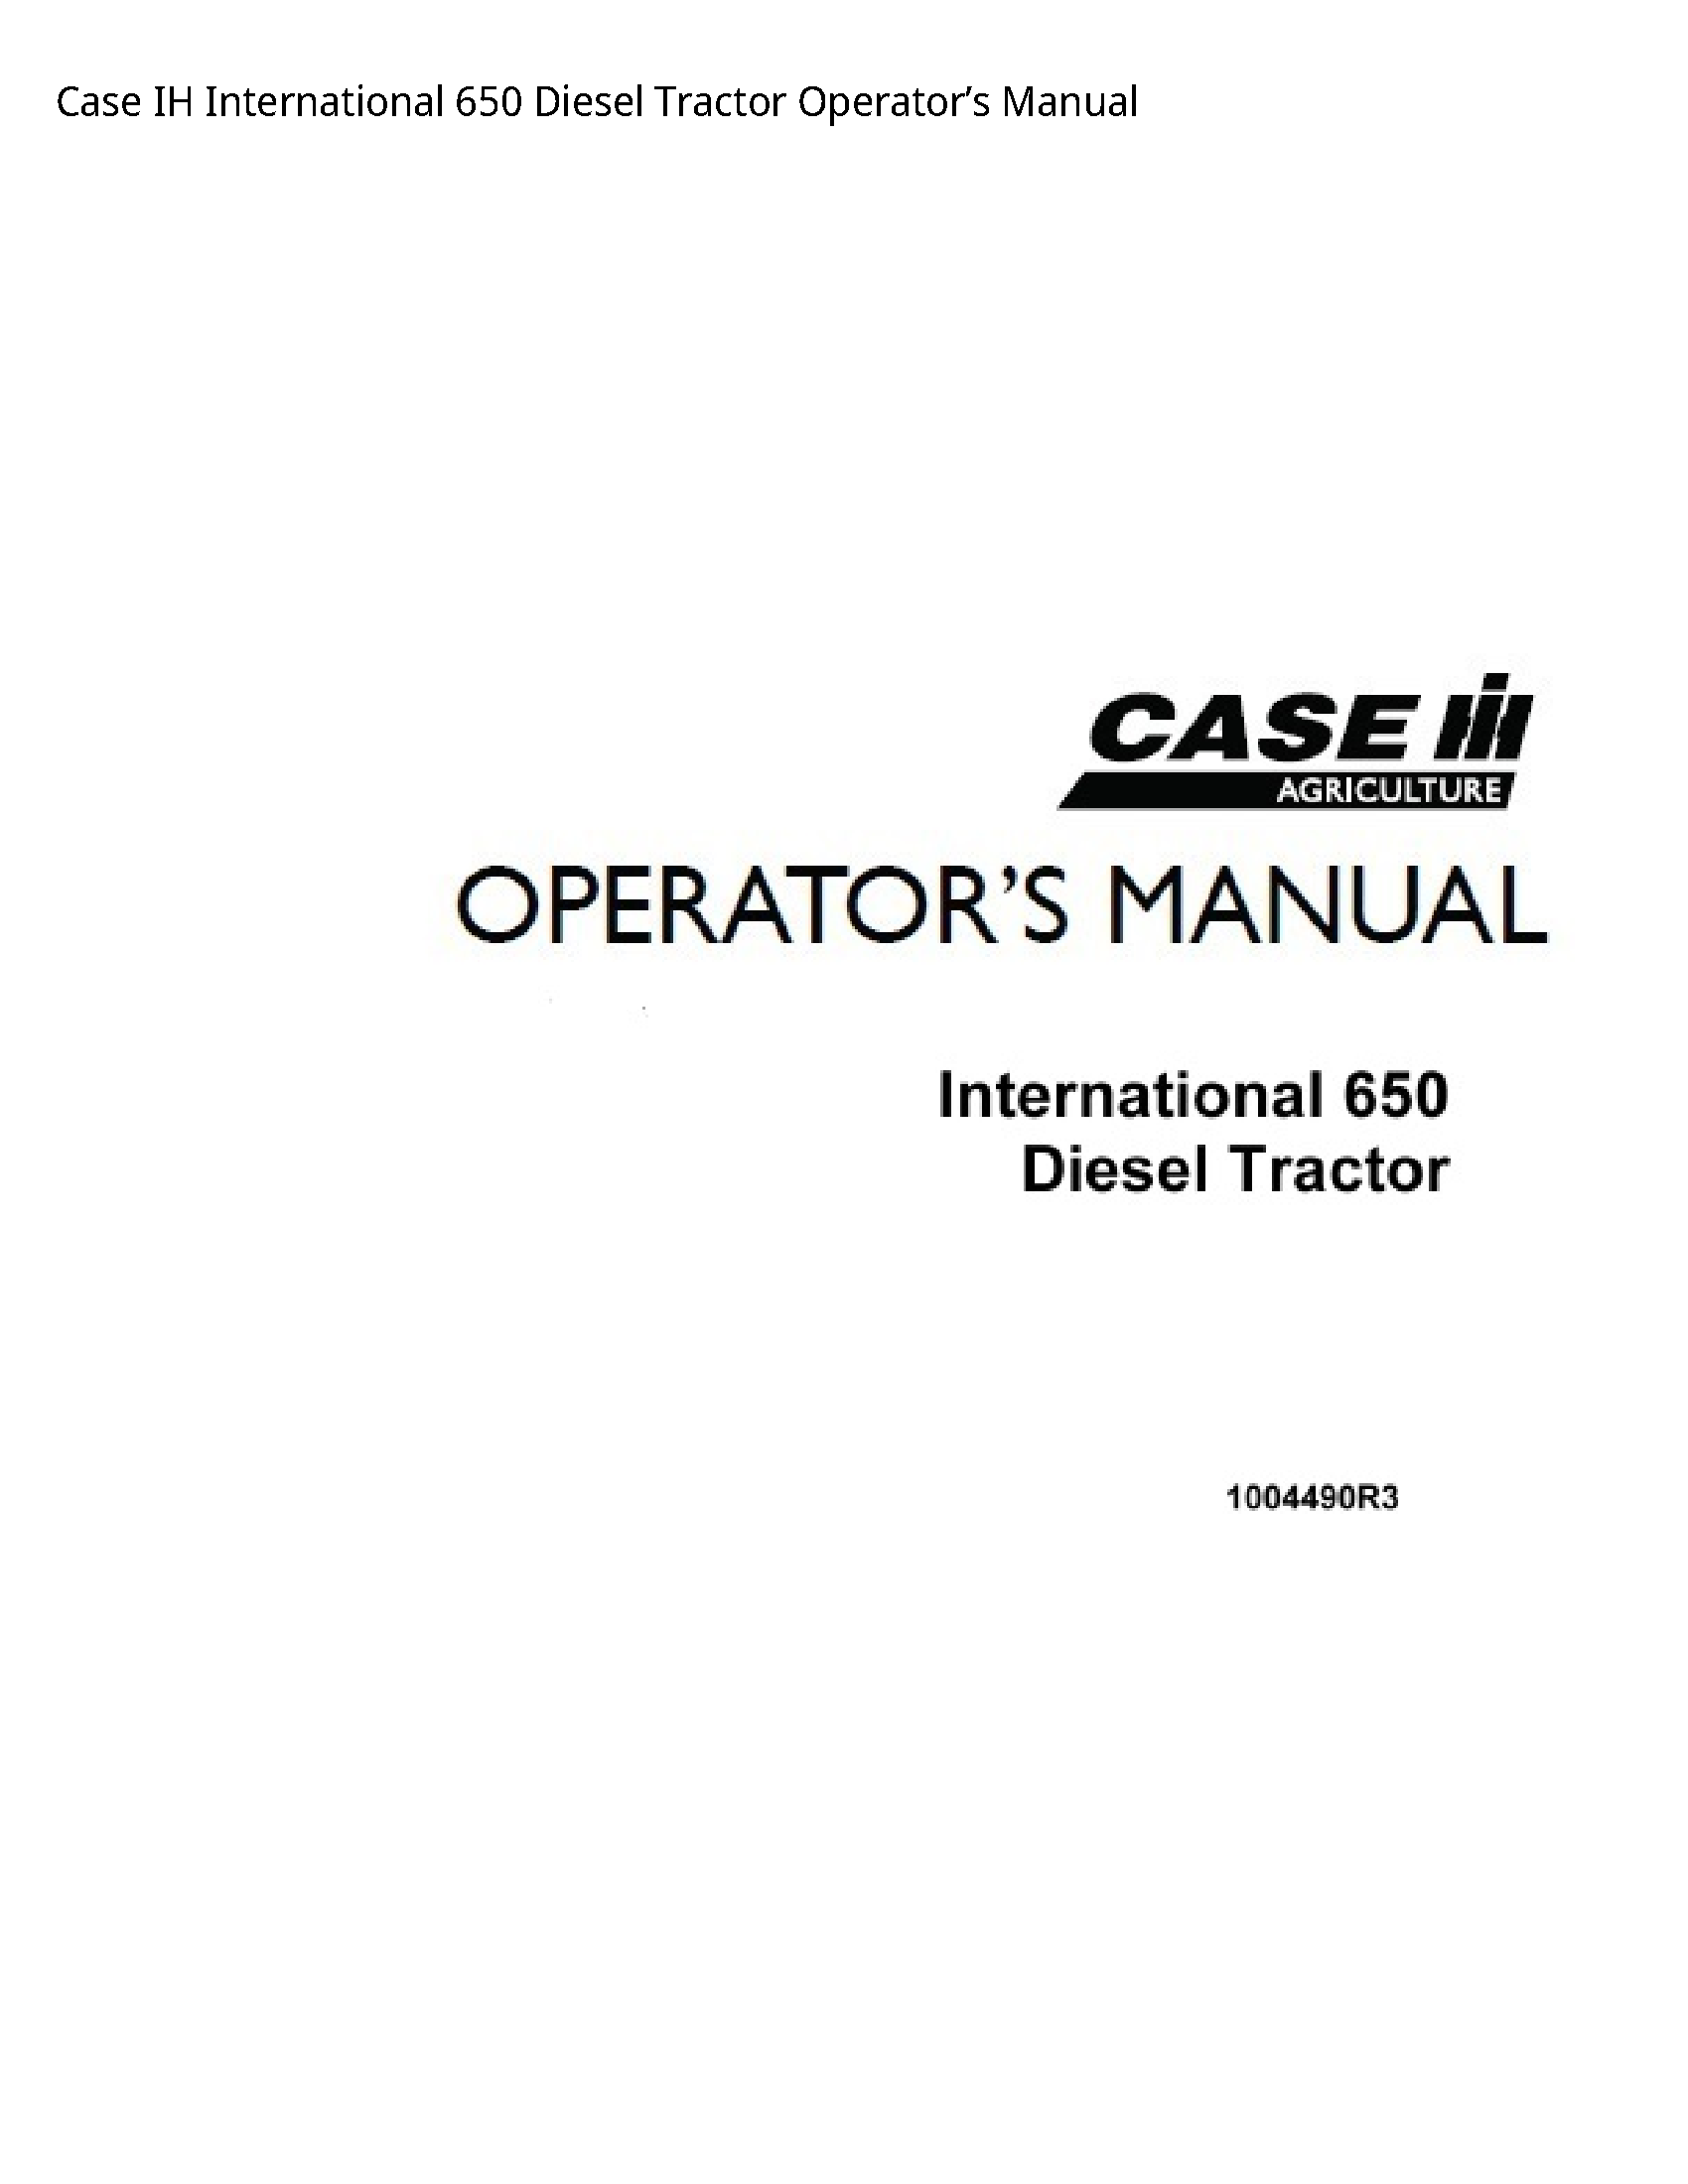 Case/Case IH 650 IH International Diesel Tractor Operator’s manual